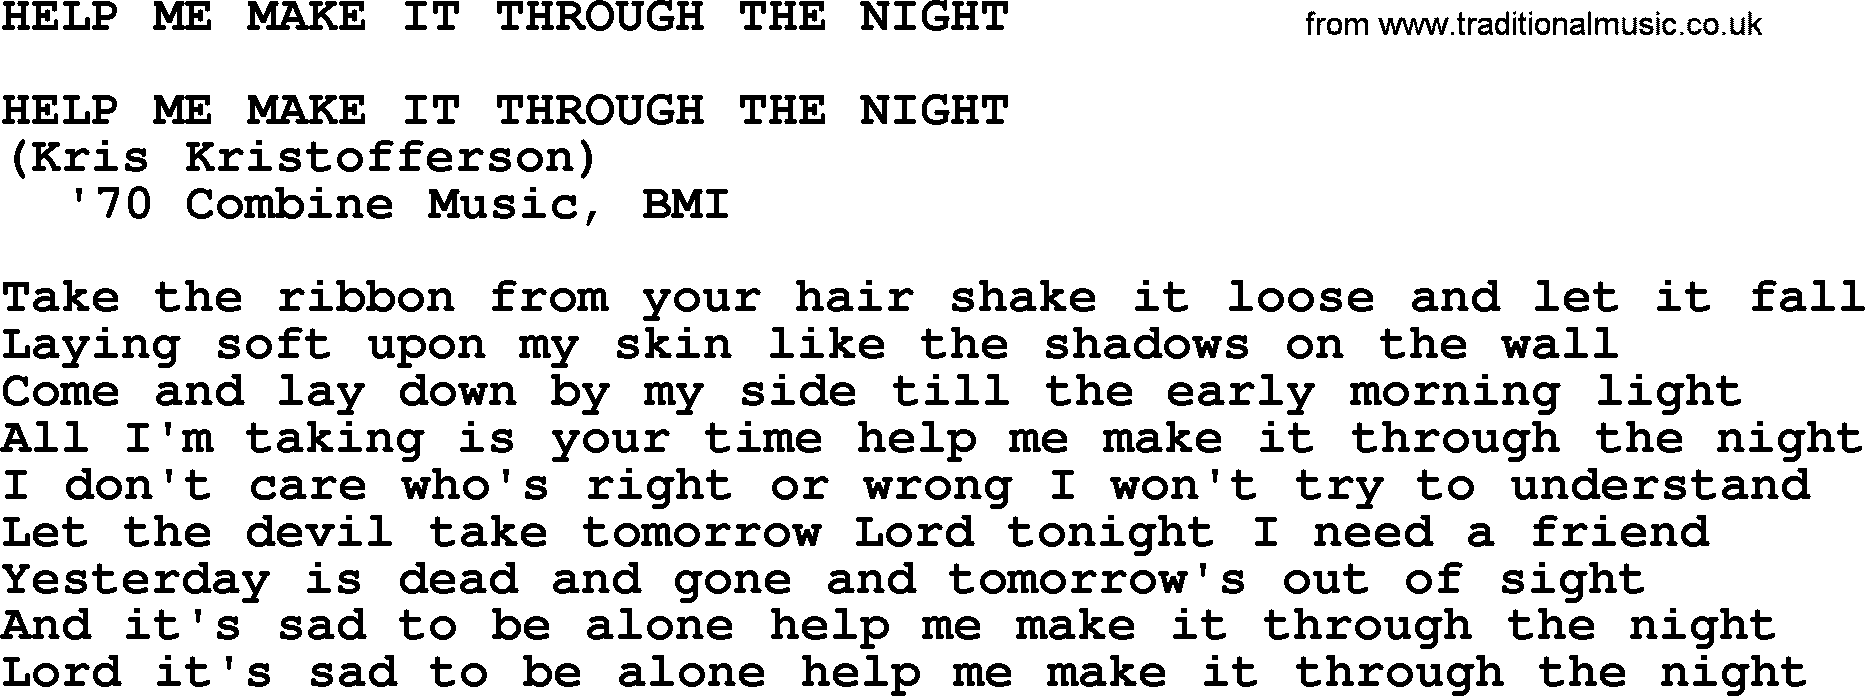 Merle Haggard song: Help Me Make It Through The Night, lyrics.